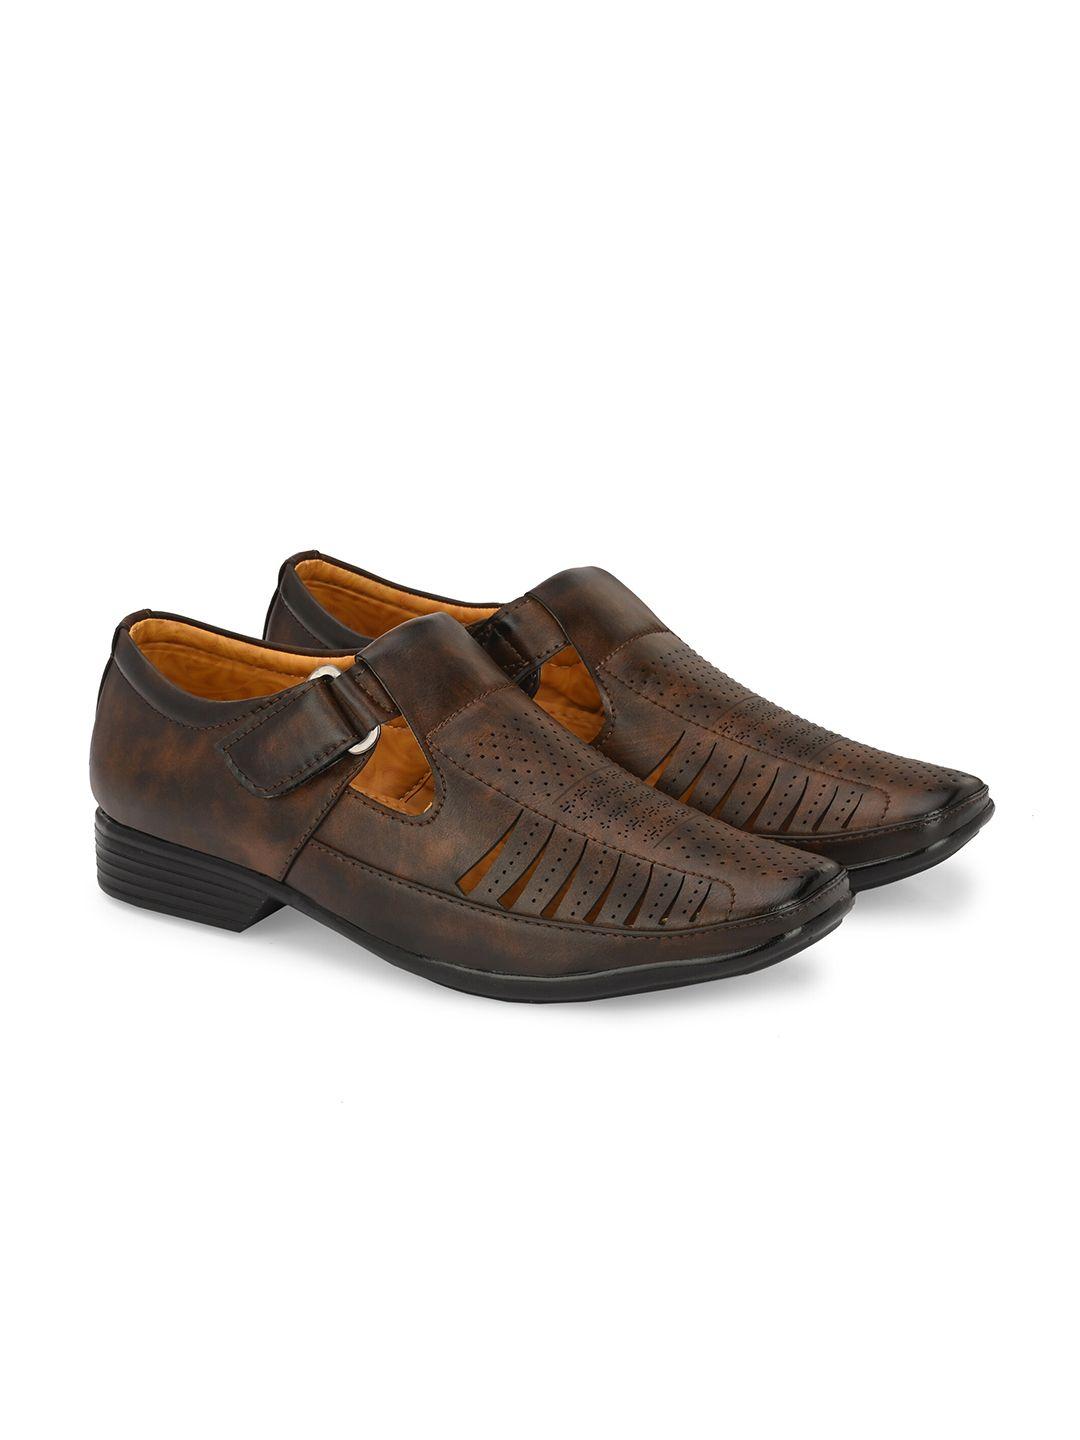 azzaro-black-men-velcro-closure-shoe-style-sandals-with-laser-cuts